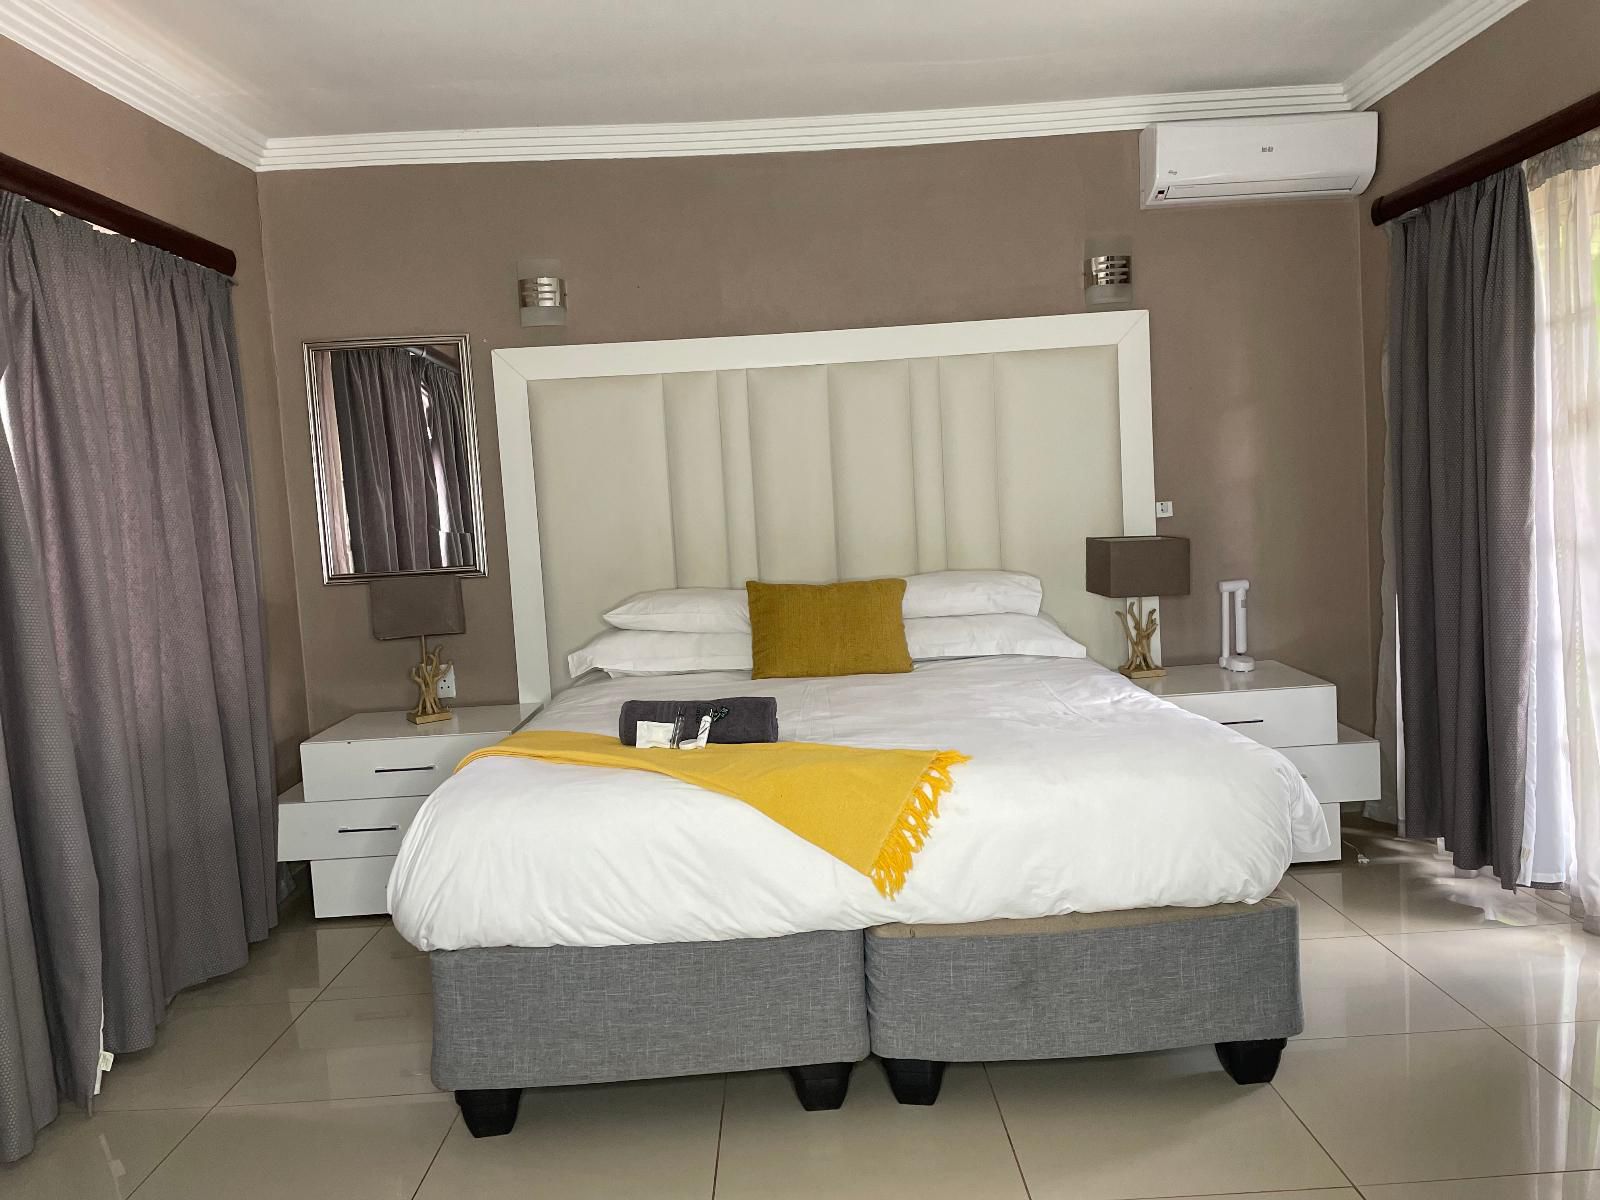 1 Oak Lodge Thohoyandou Limpopo Province South Africa Unsaturated, Bedroom